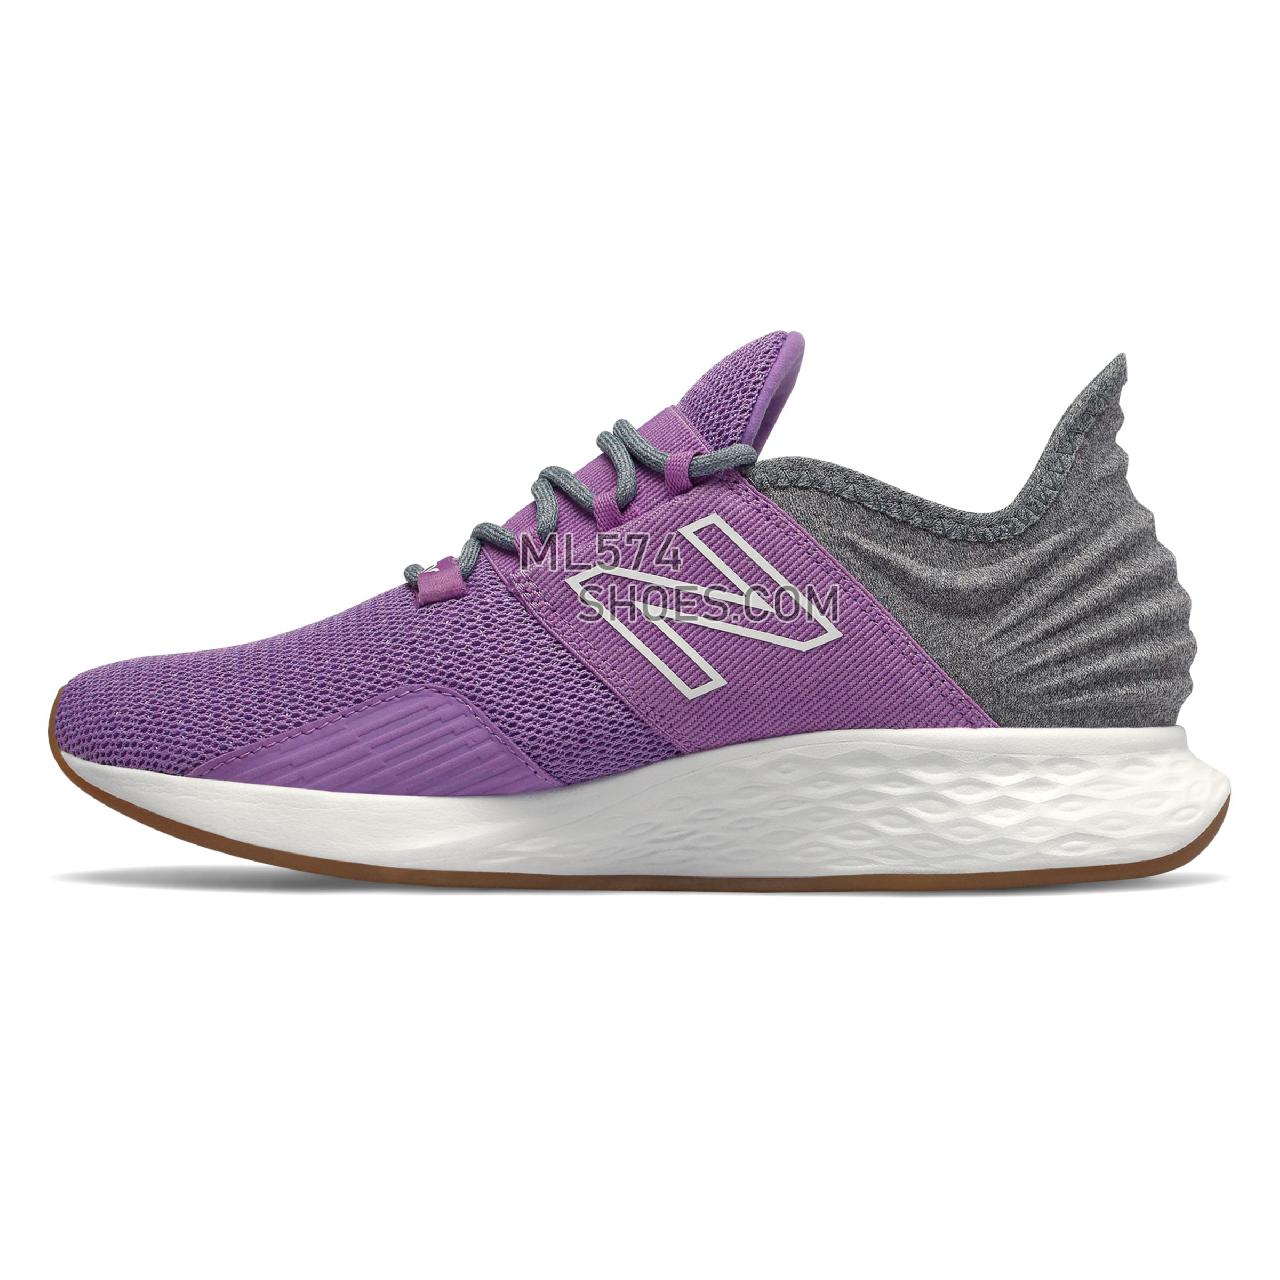 New Balance Fresh Foam Roav Tee Shirt - Women's Neutral Running - Neo Violet with Light Aluminum - WROAVTV